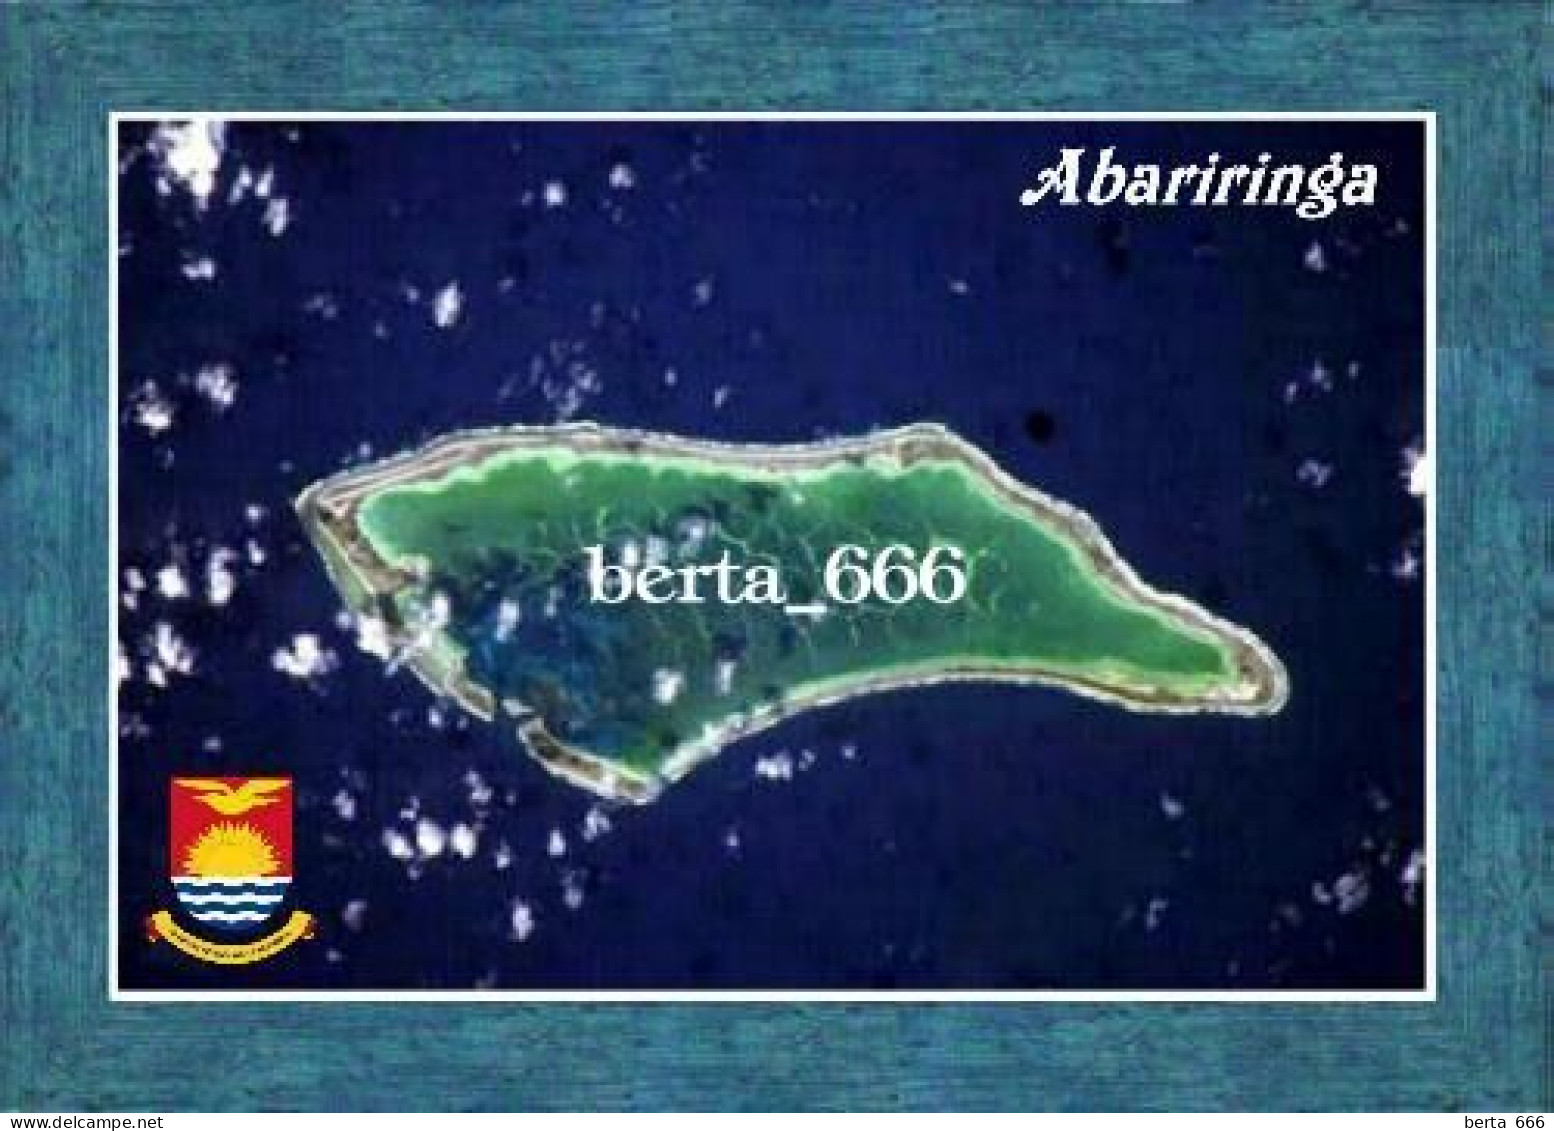 Kiribati Abariringa Kanton Island Satellite View New Postcard - Kiribati